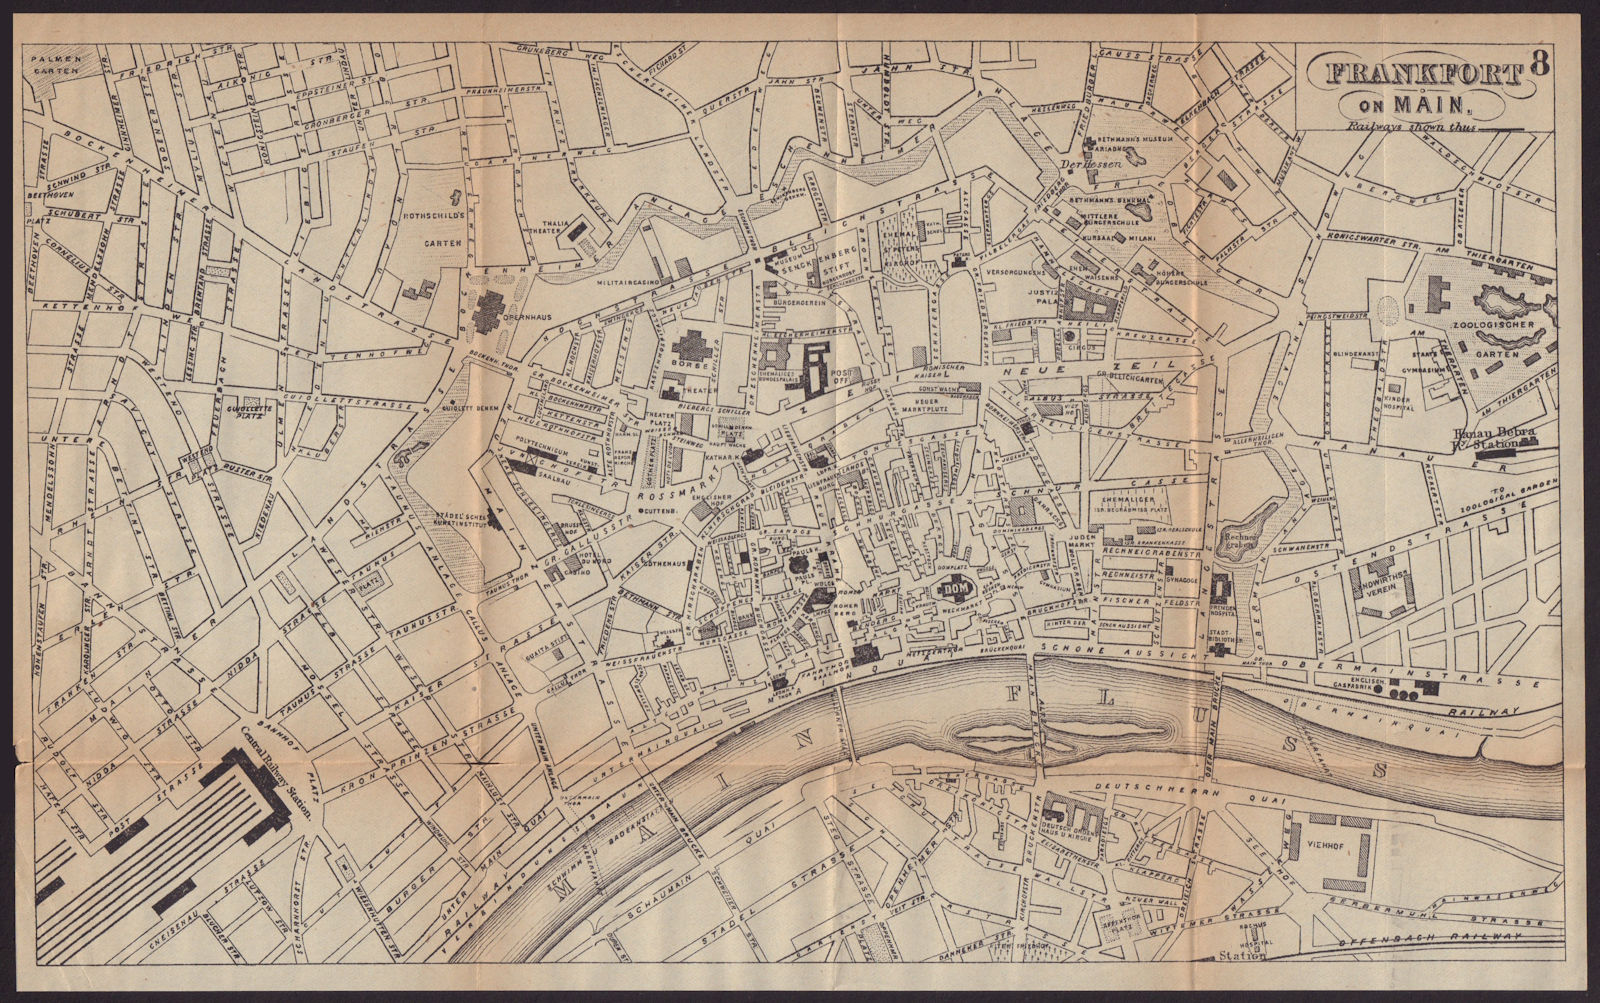 Associate Product FRANKFURT AM MAIN antique town plan city map. Germany. BRADSHAW c1898 old